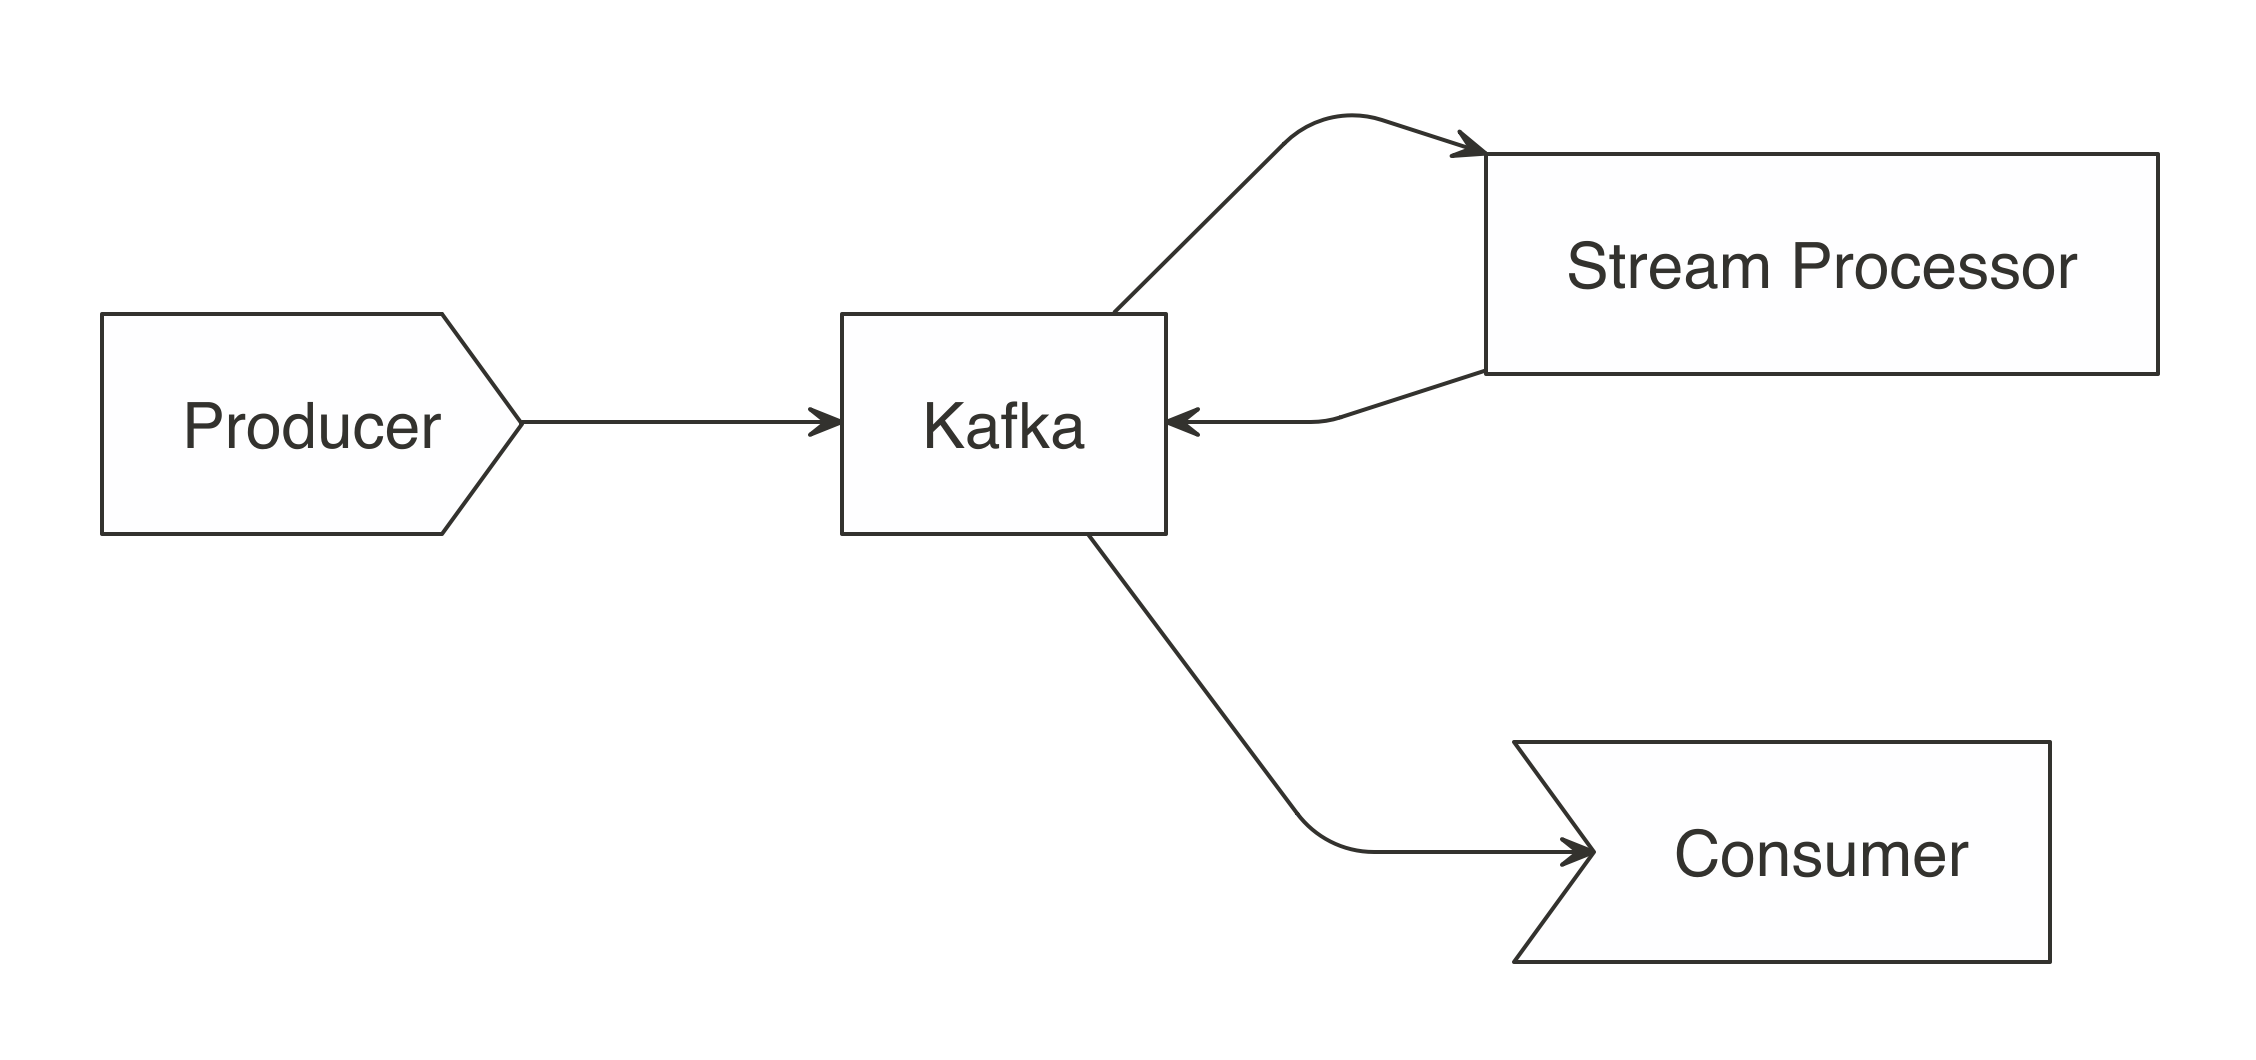 A Kafka workflow using stream processors